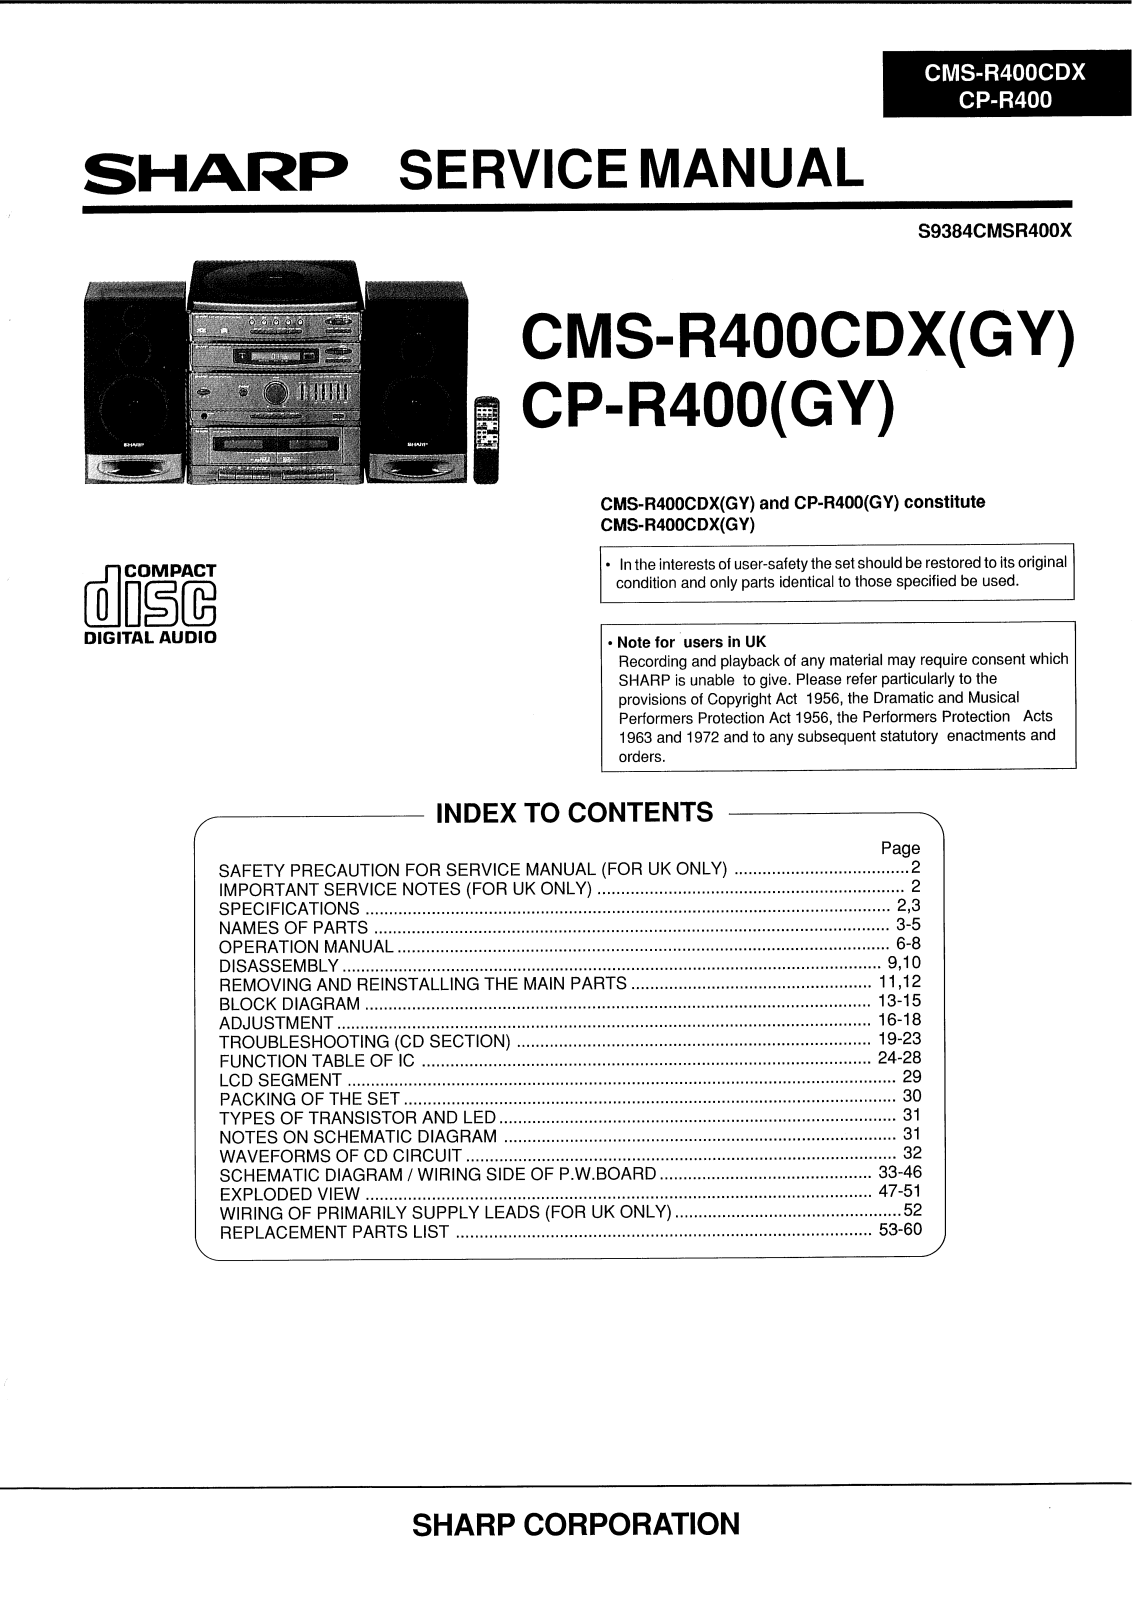 Sharp CMSR-400-CDX, CPR-400-Y Service manual